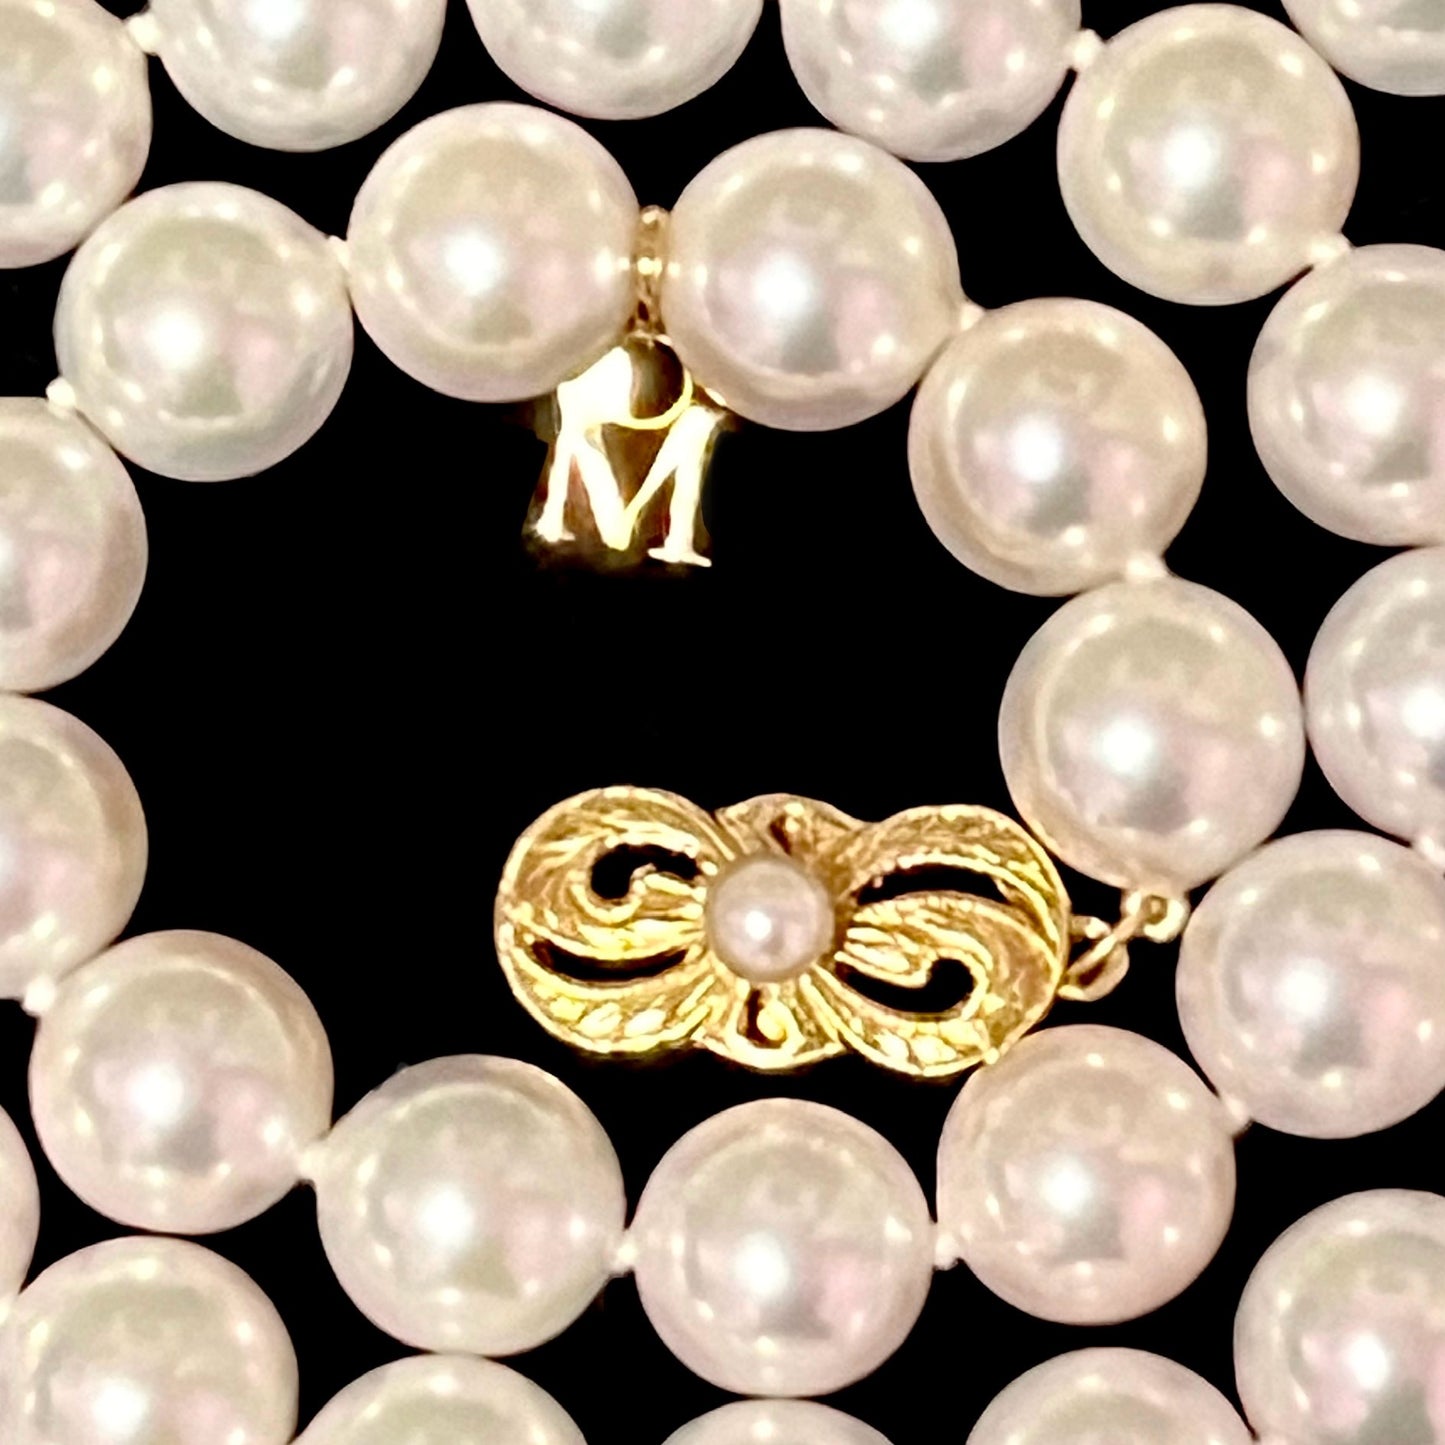 Mikimoto Estate Akoya Pearl Necklace 17" 18k Y Gold 8.5 mm Certified $10,750 311591 - Certified Fine Jewelry